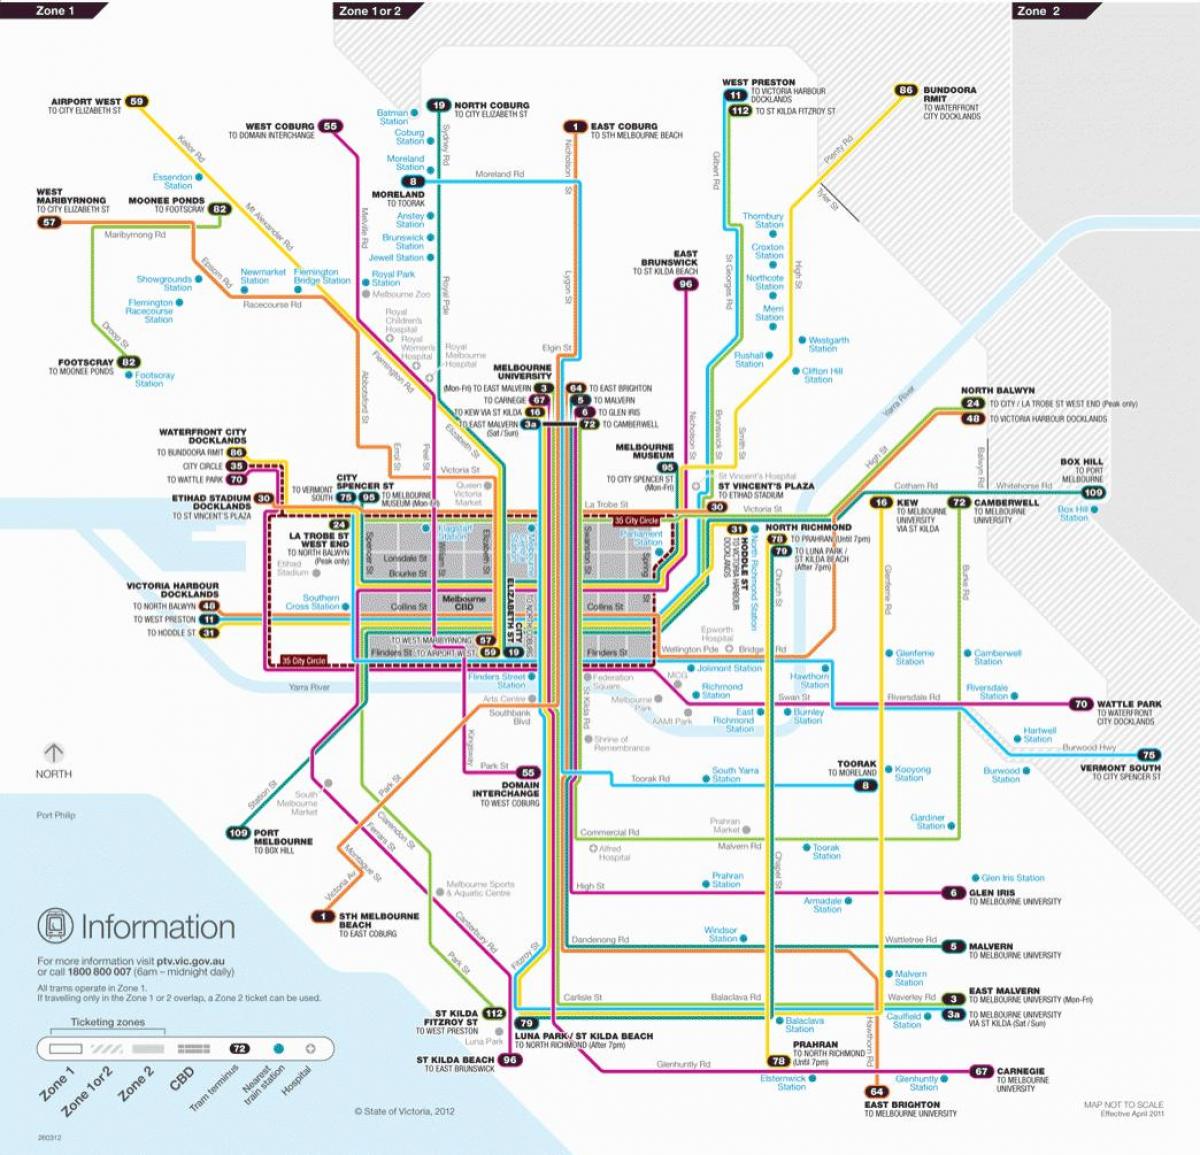 Melbourne tramvaj mreže mapu